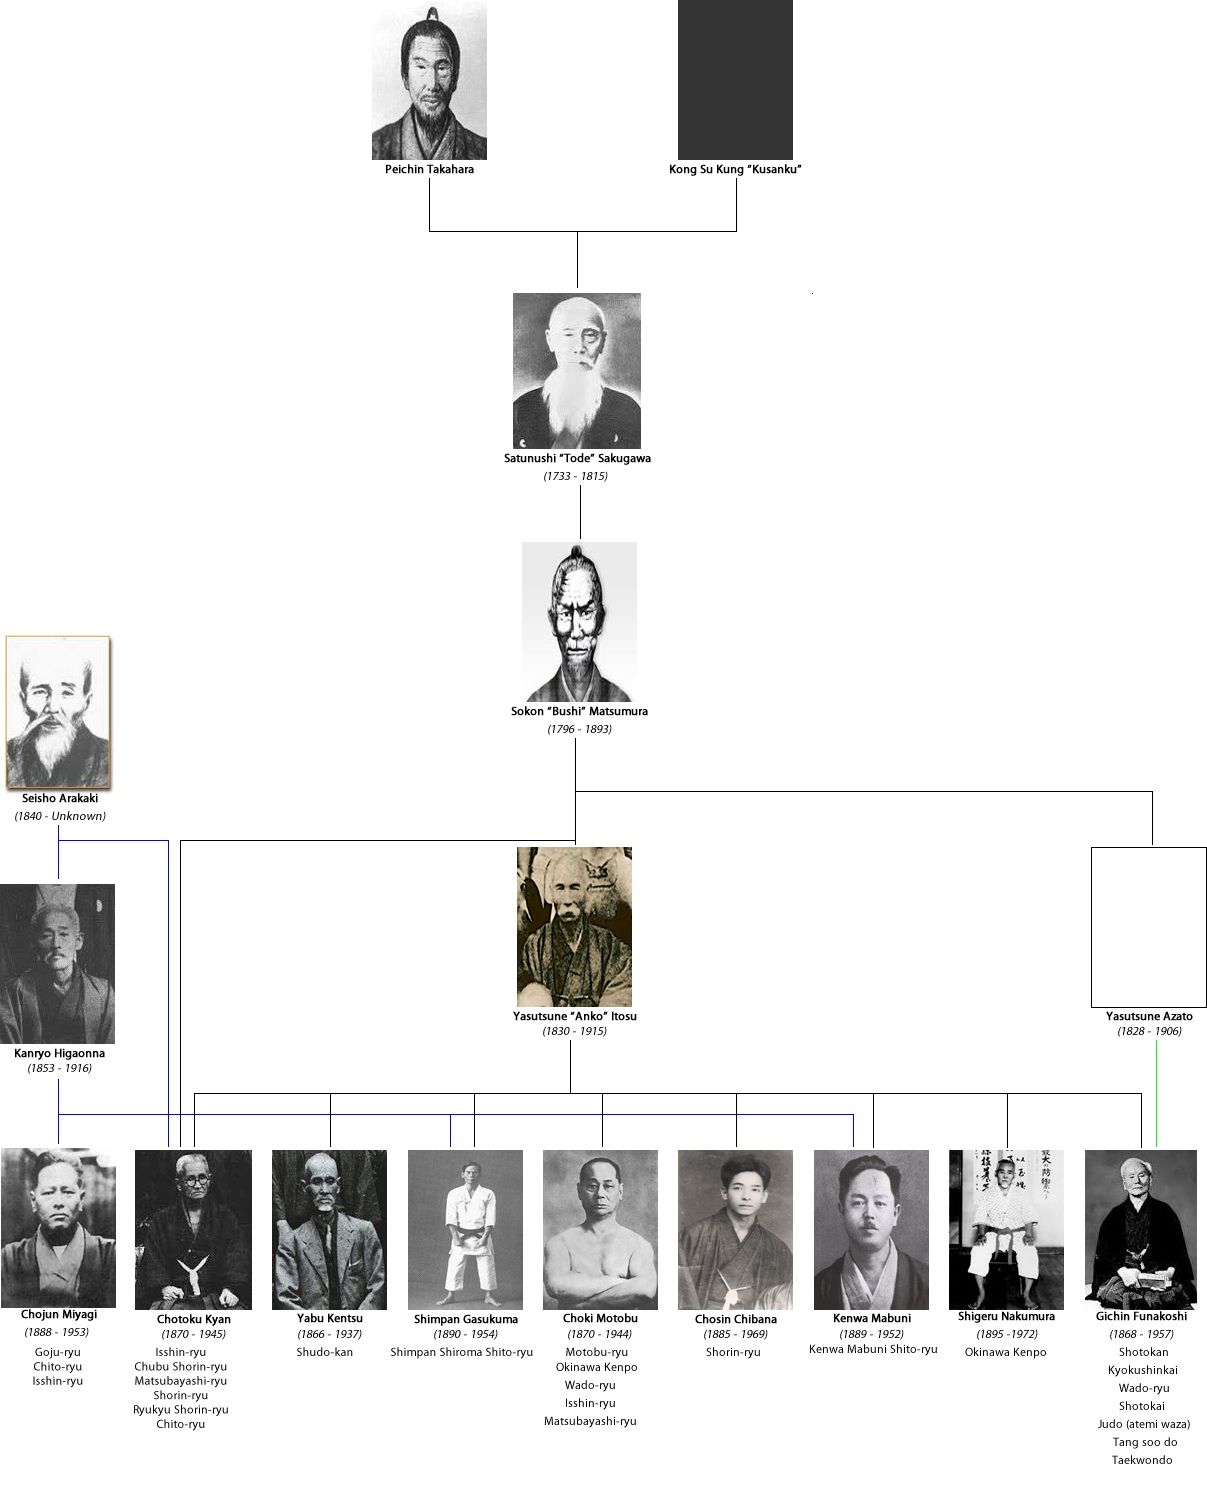 family tree of shotokan karate - Google Search